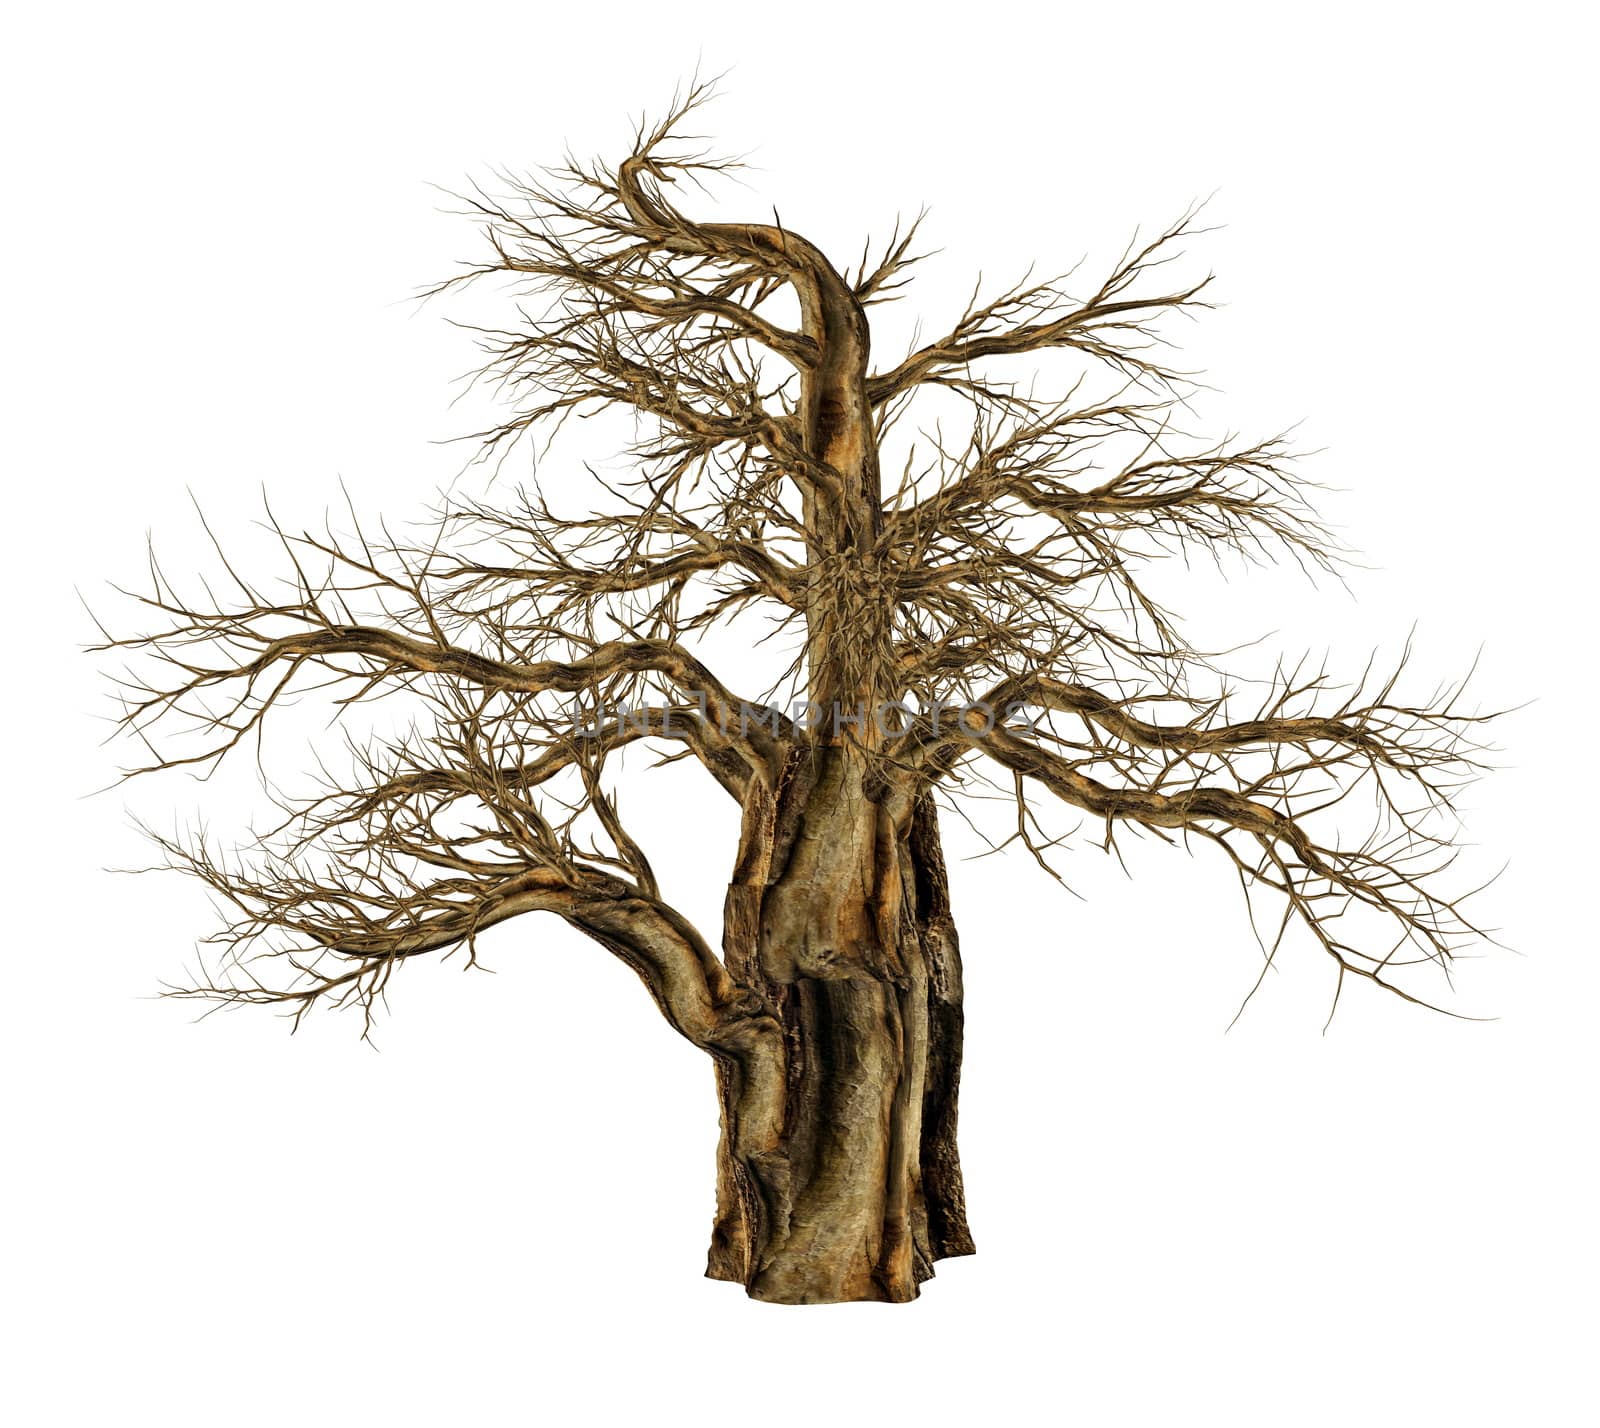 Baobab tree without leaves, adansonia digitata - 3D render by Elenaphotos21